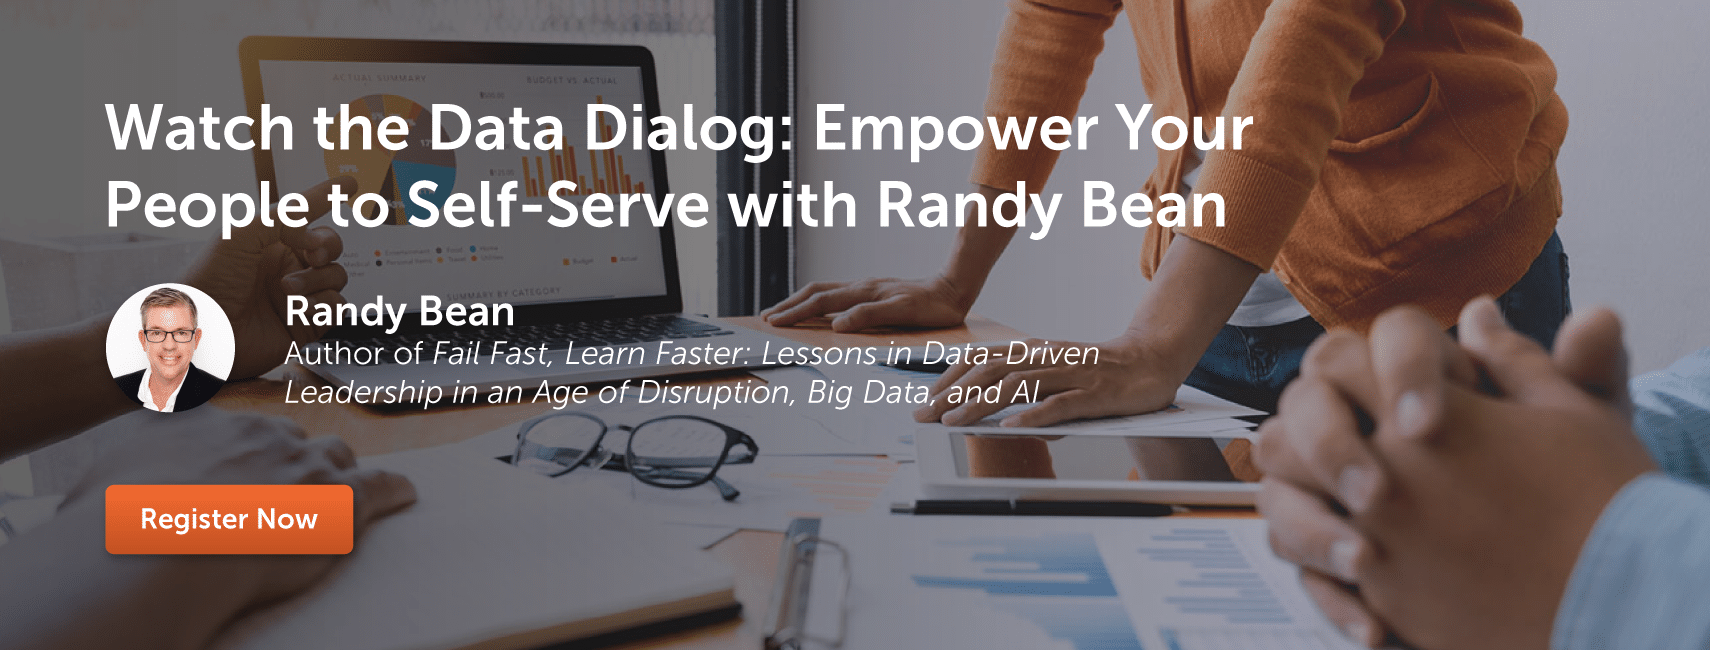 CTA banner of Randy Bean's Data Dialog webinar